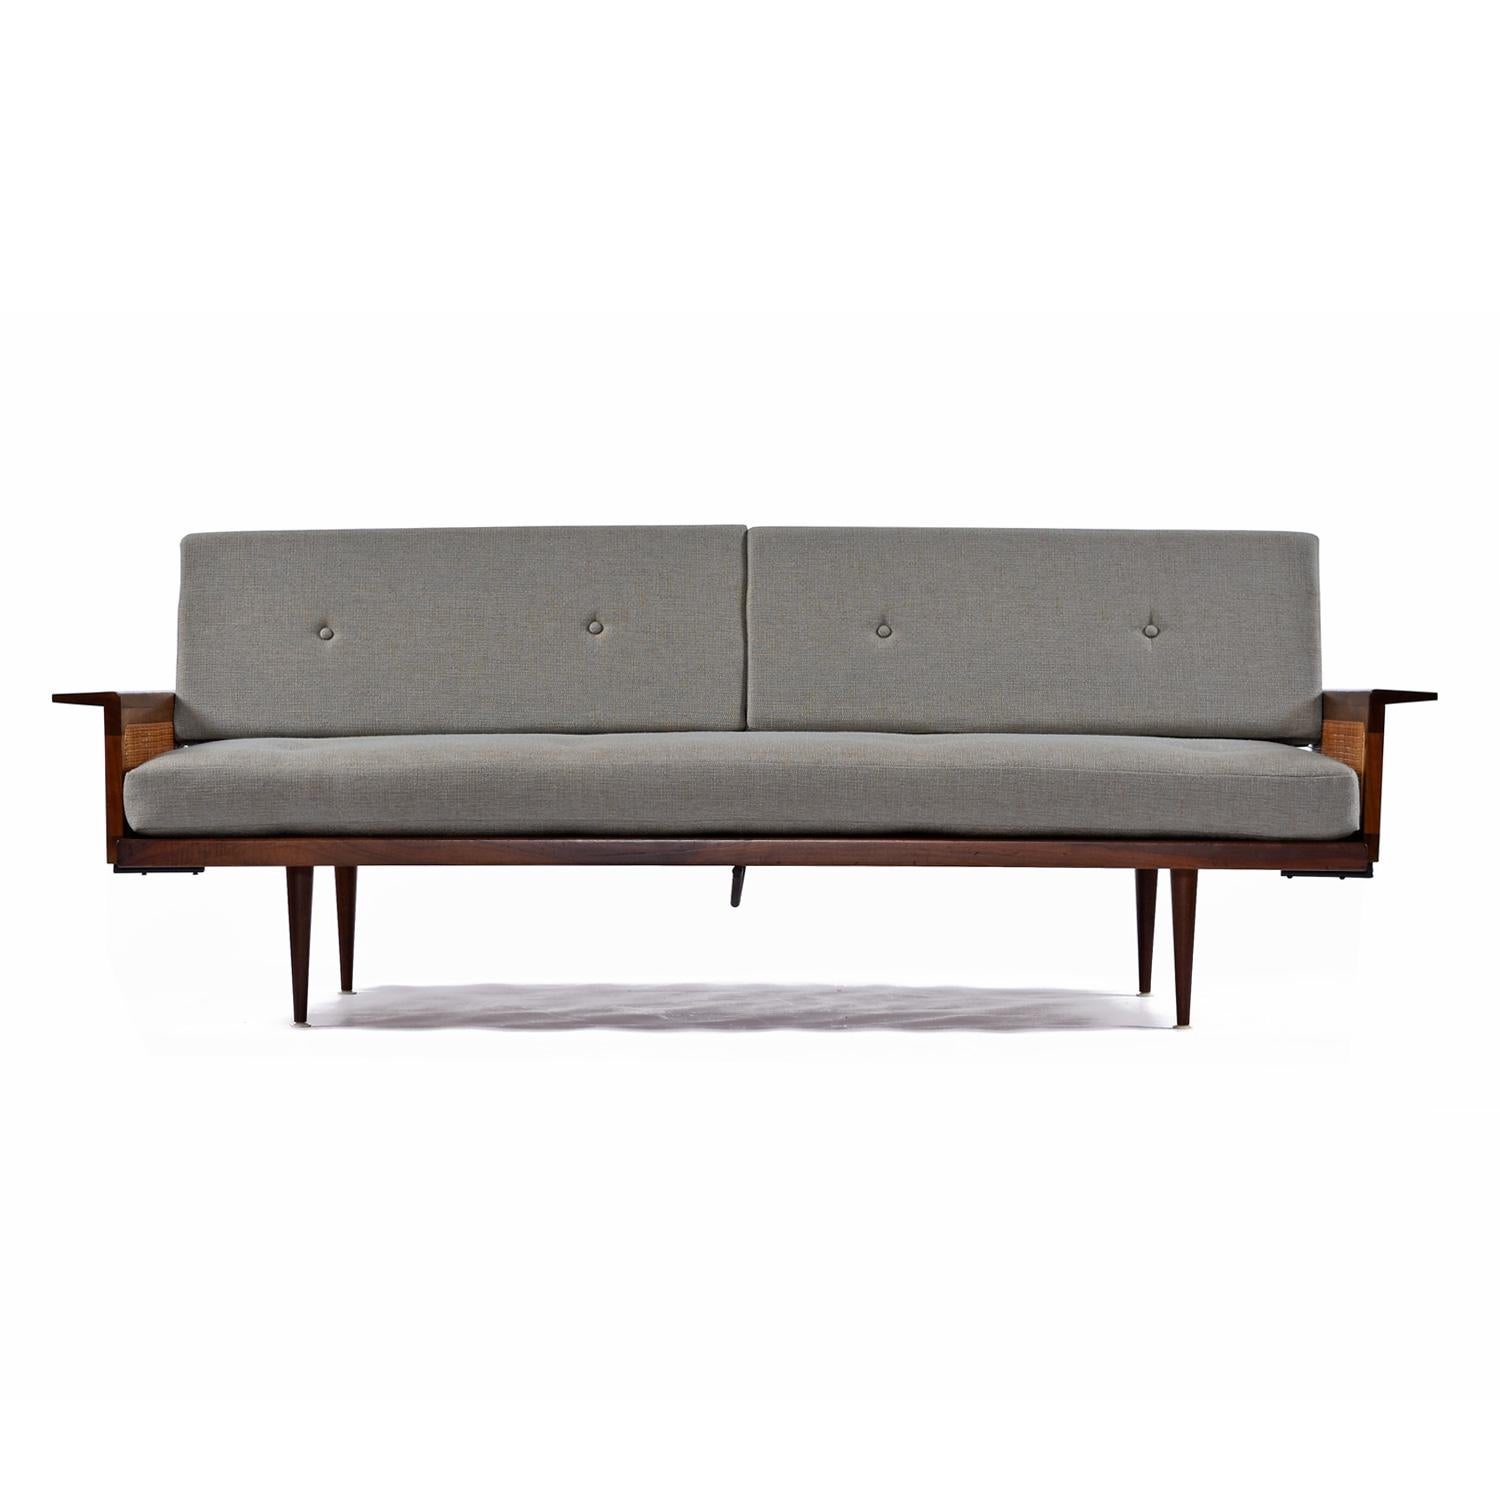 Mid-20th Century Restored Mid-Century Modern Walnut Cane Arm Daybed Sofa